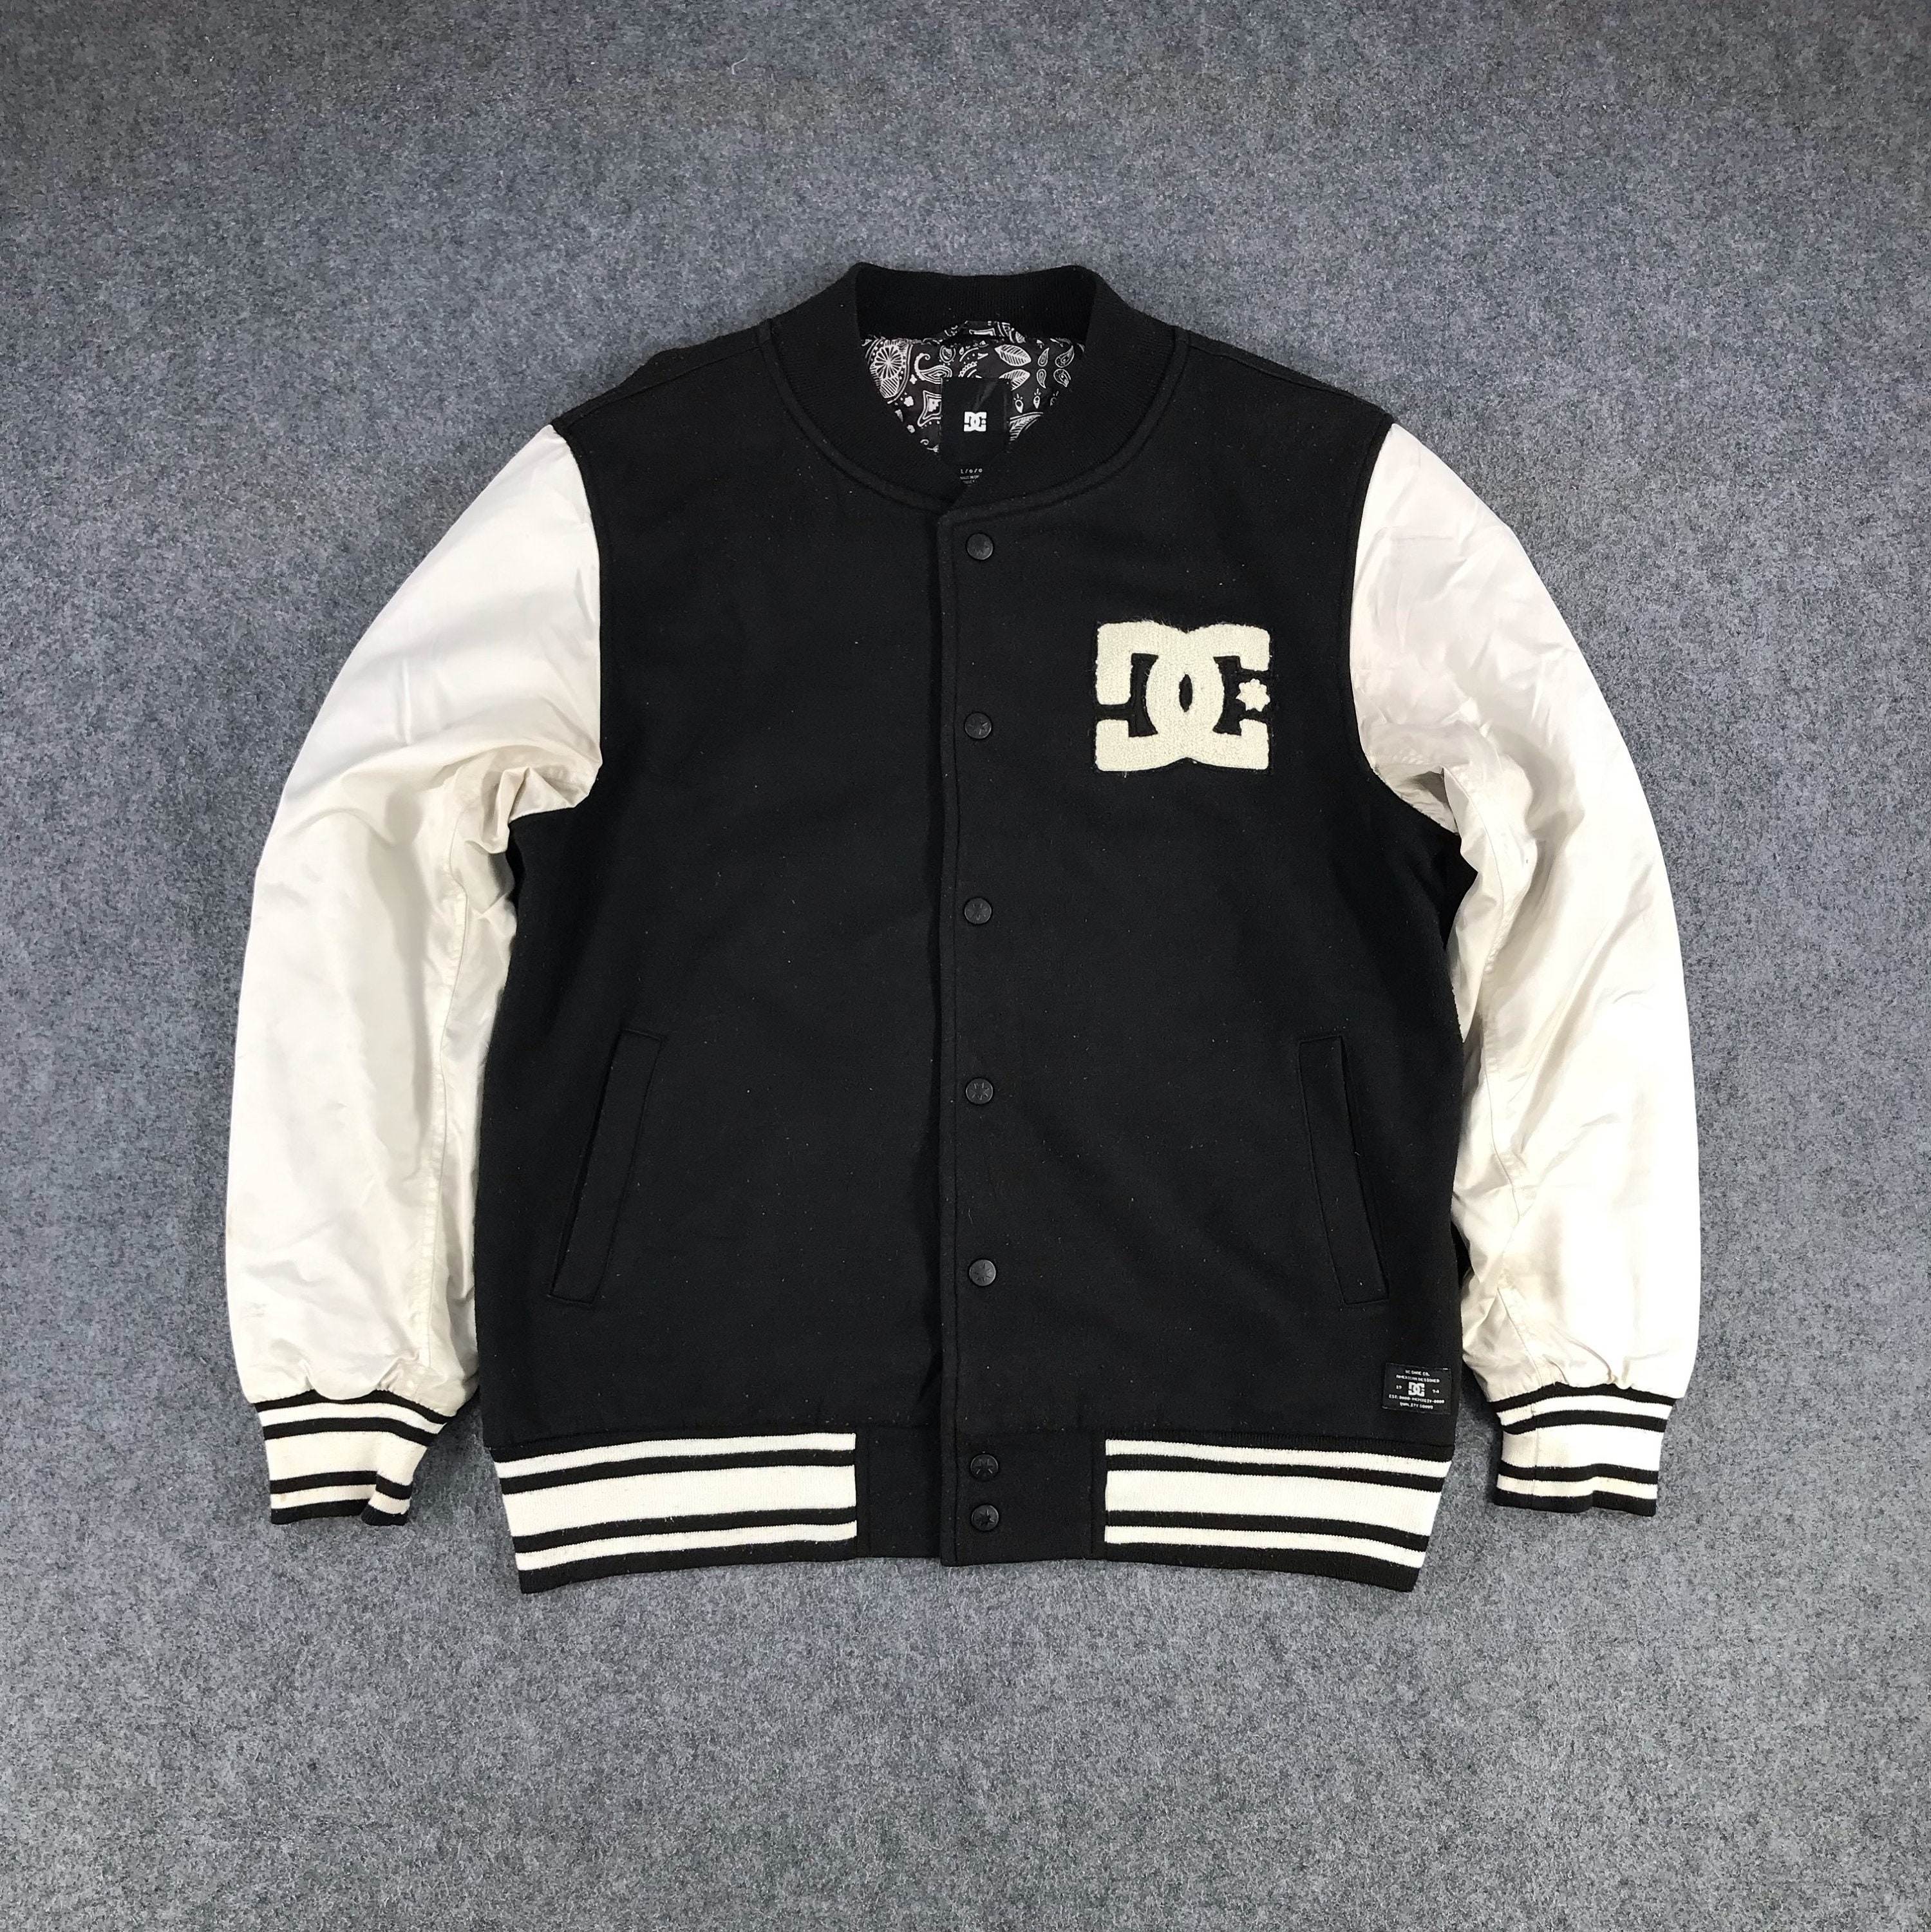 Varsity Jacket (Old school Jacket)